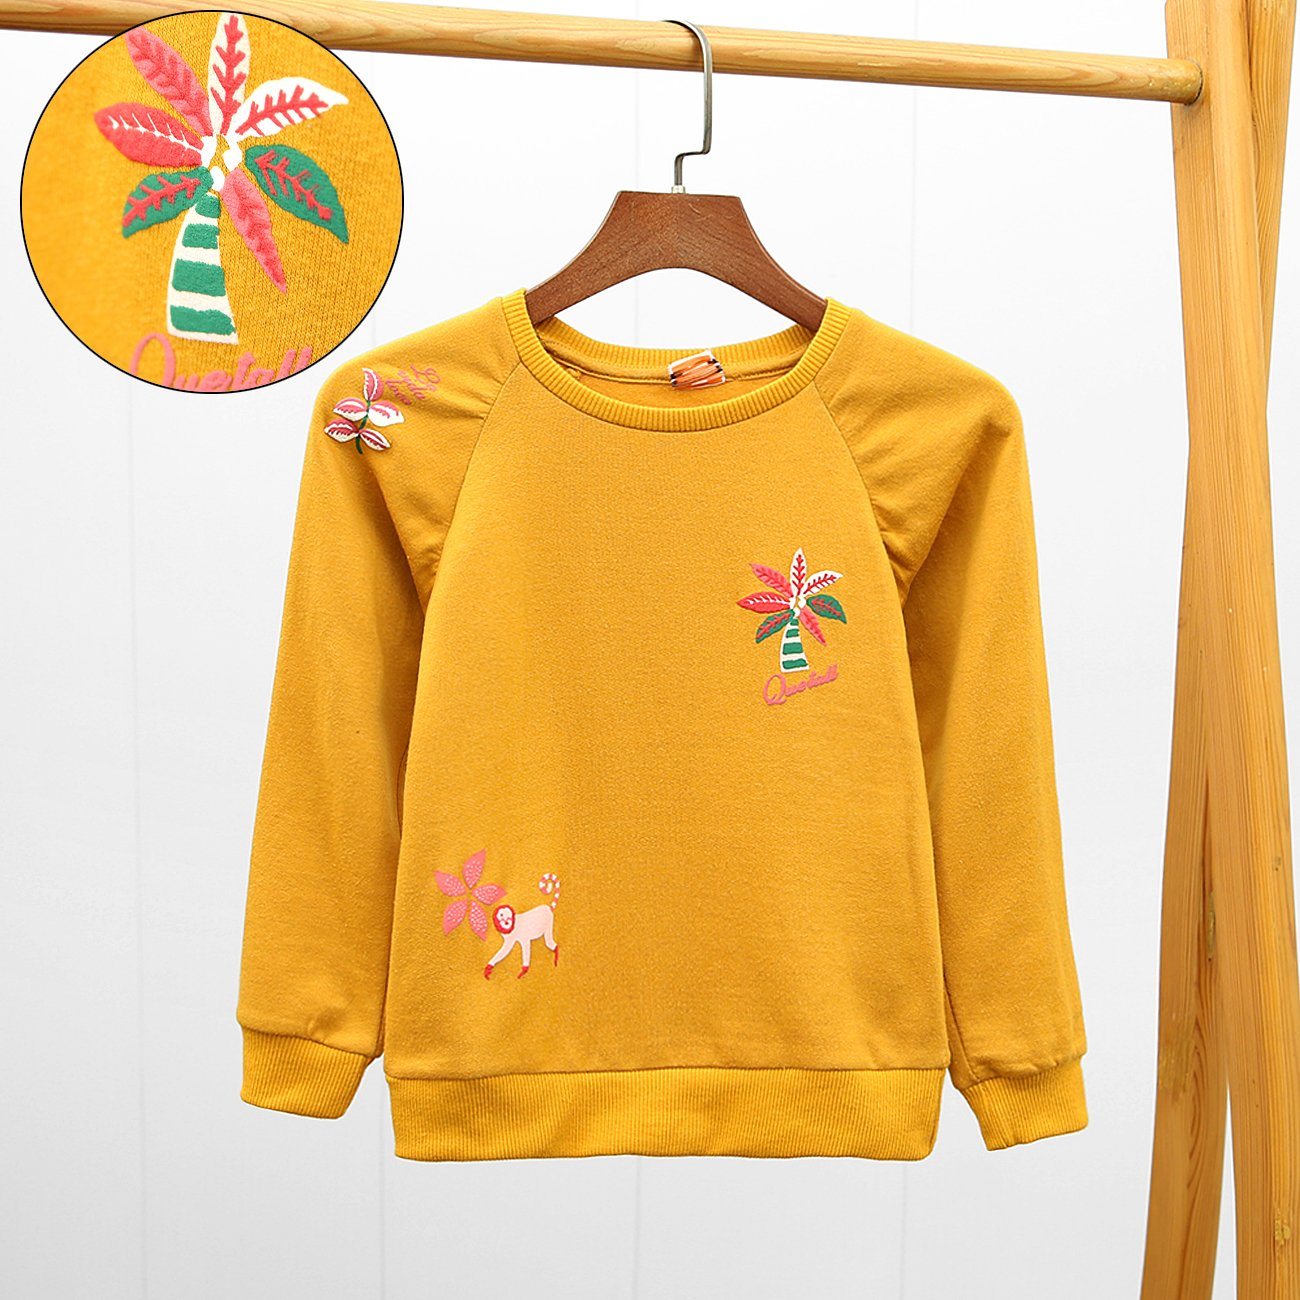 Premium Quality Embroided Fashion SweatShirt For Girls (21954)